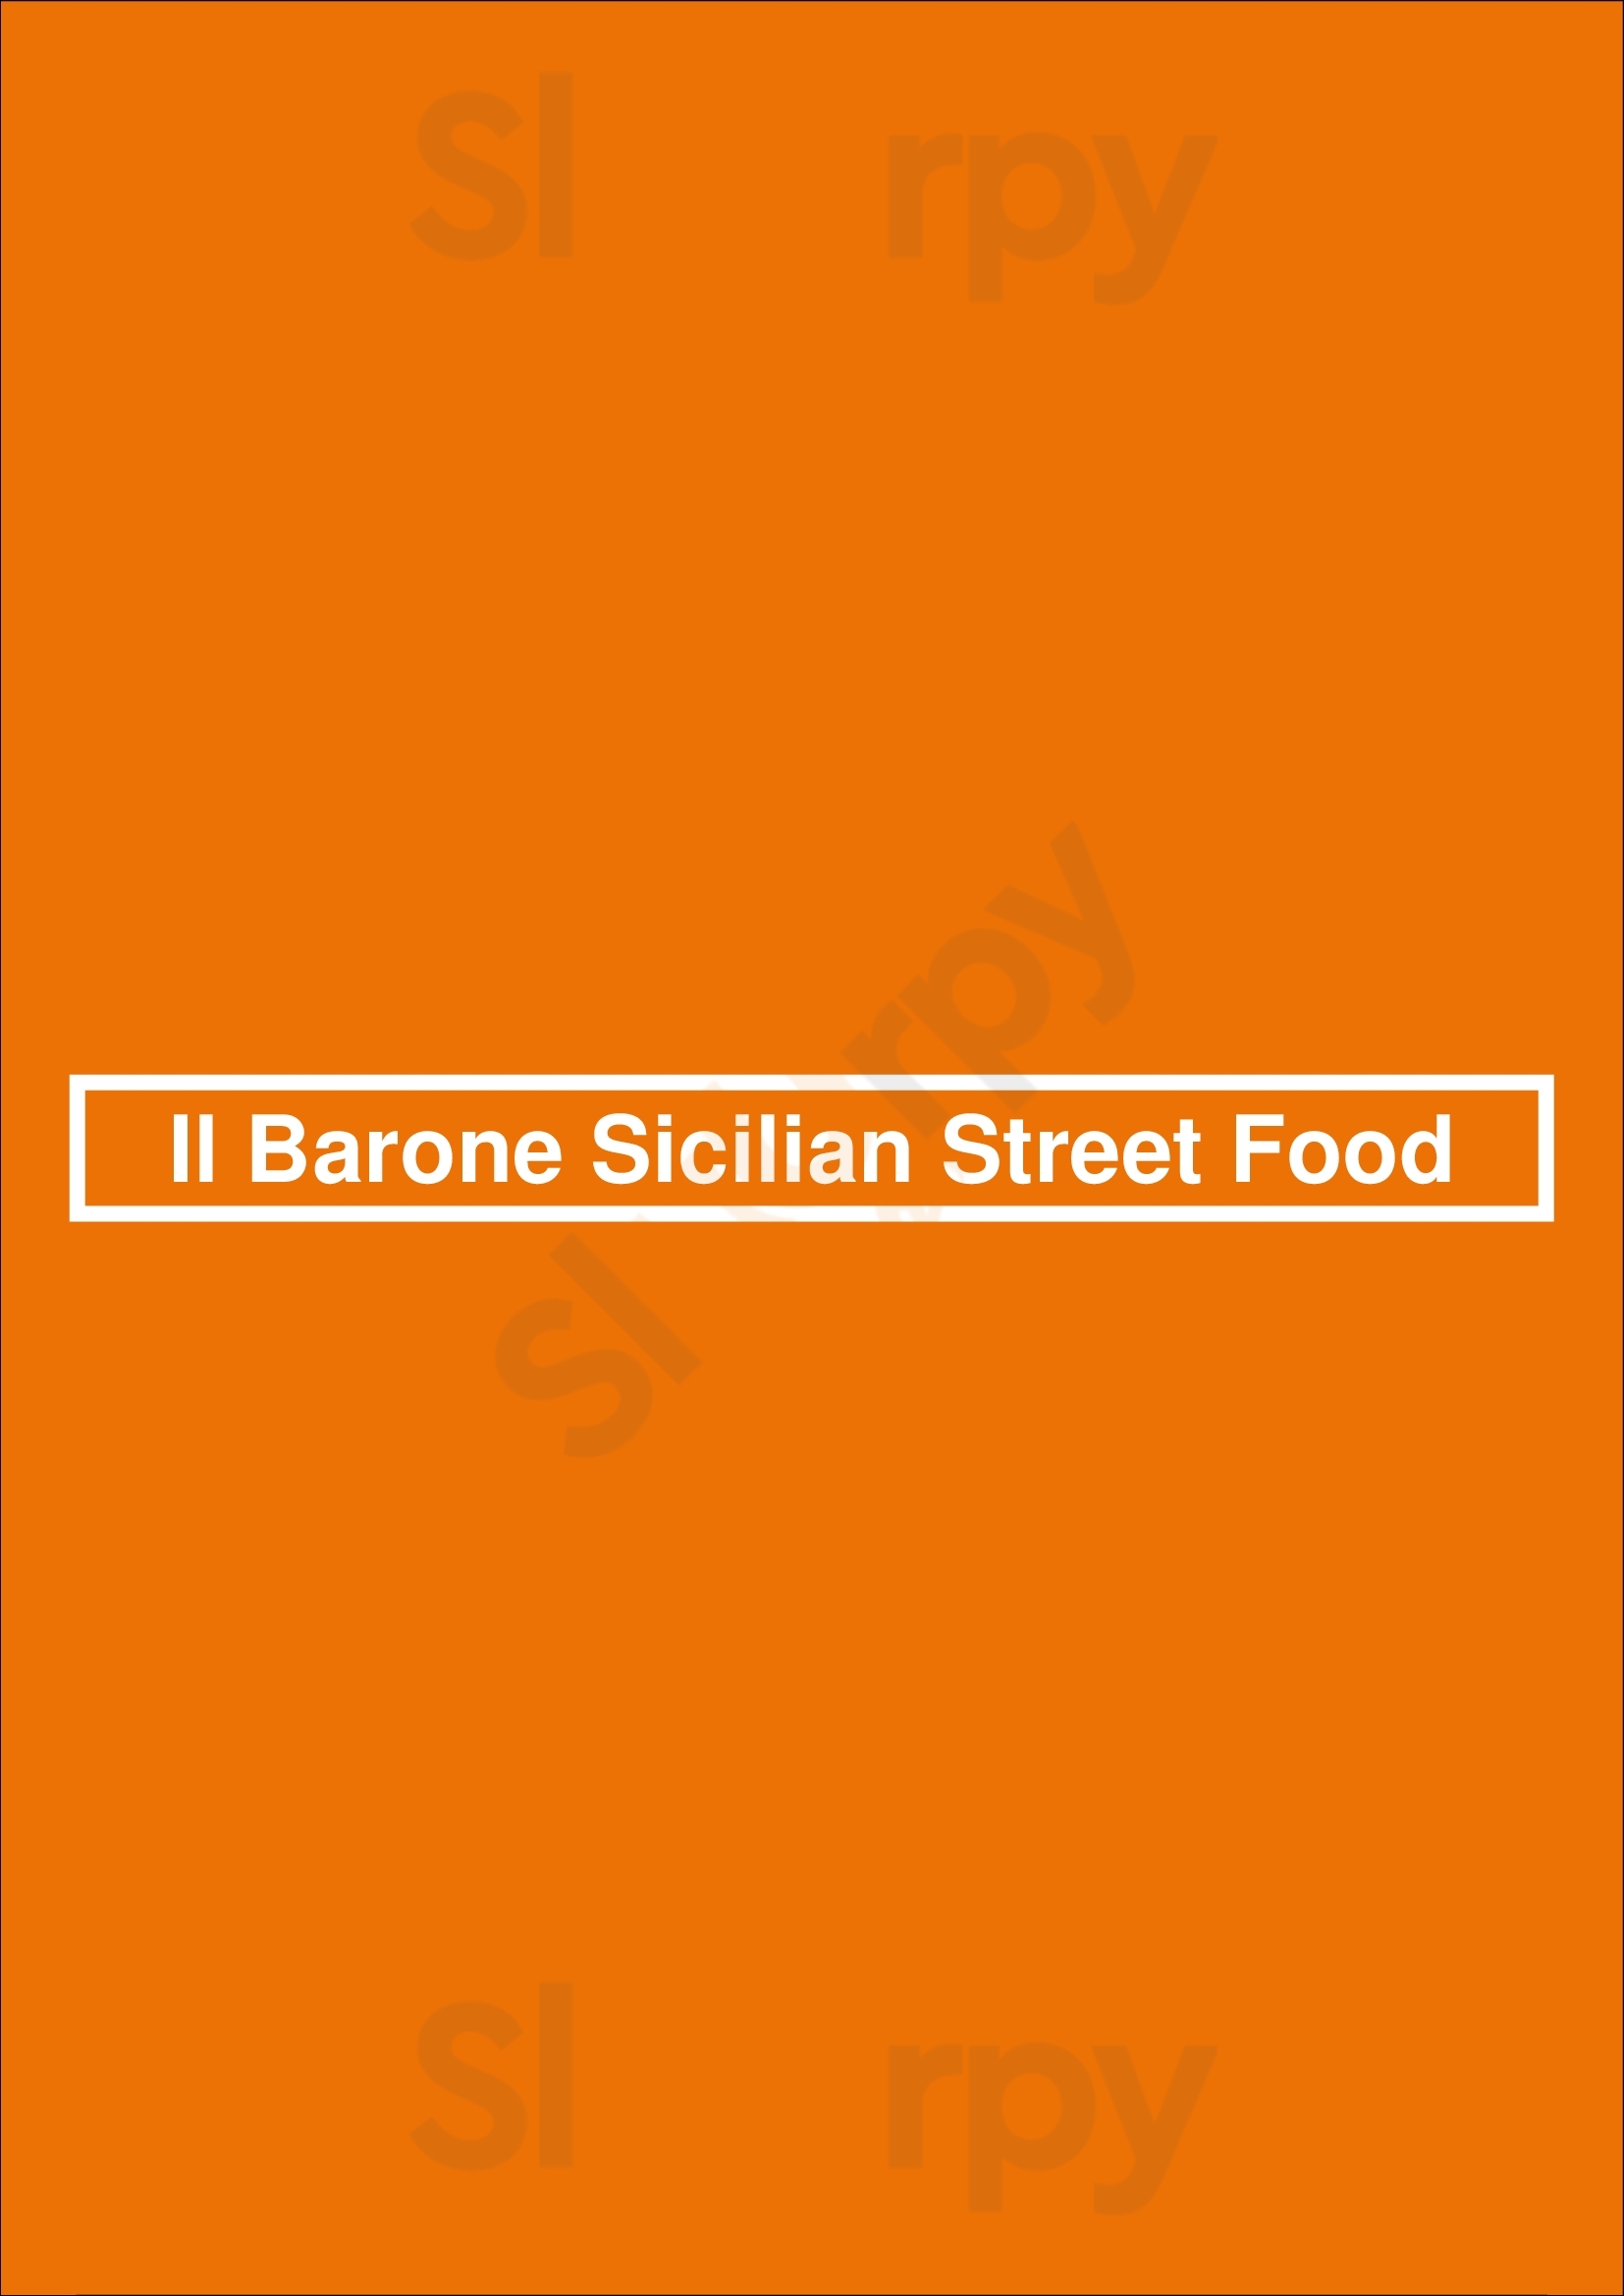 Il Barone Sicilian Street Food Huntington Beach Menu - 1